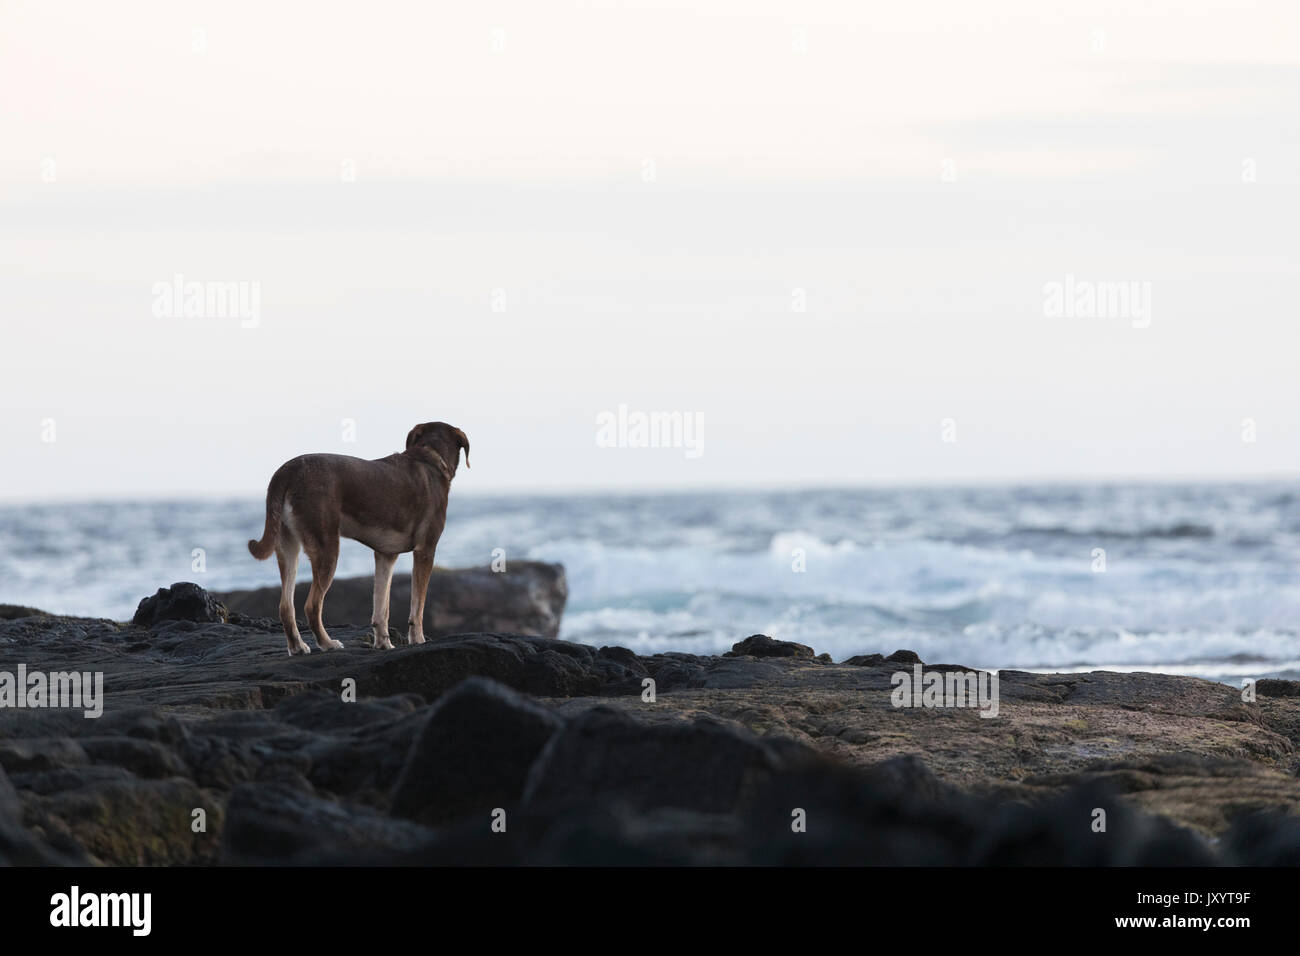 Dog standing on rocks near ocean Stock Photo